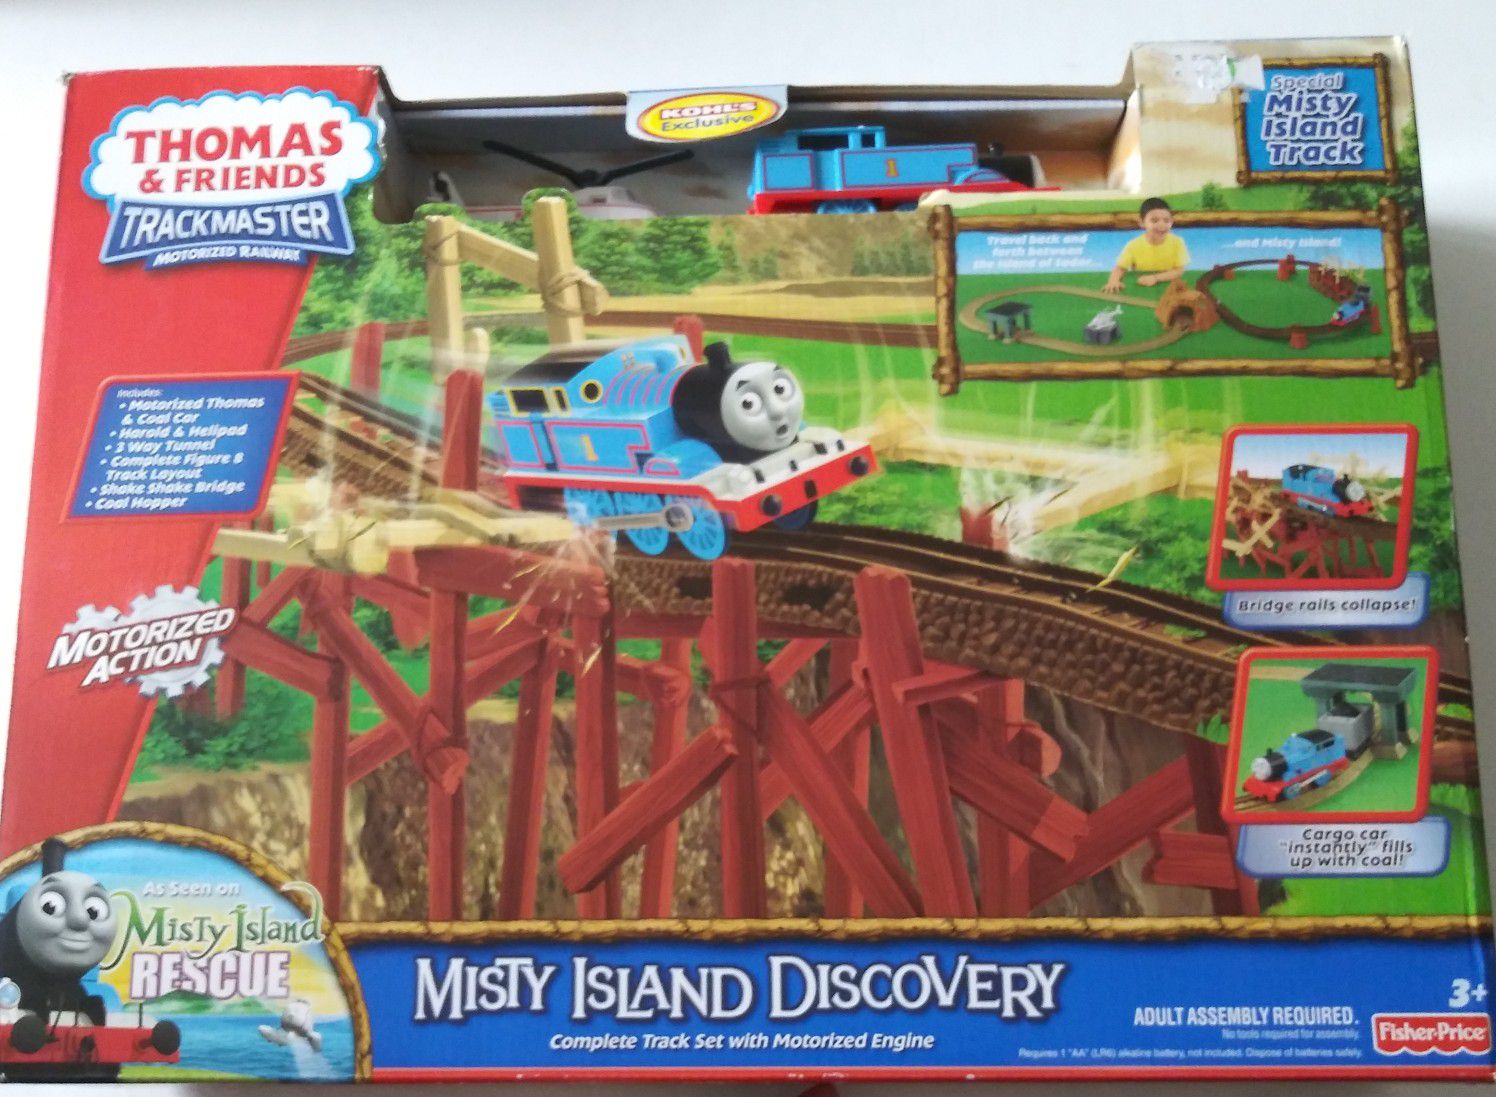 NEW! Thomas & Friends Trackmaster Misty Island Discovery